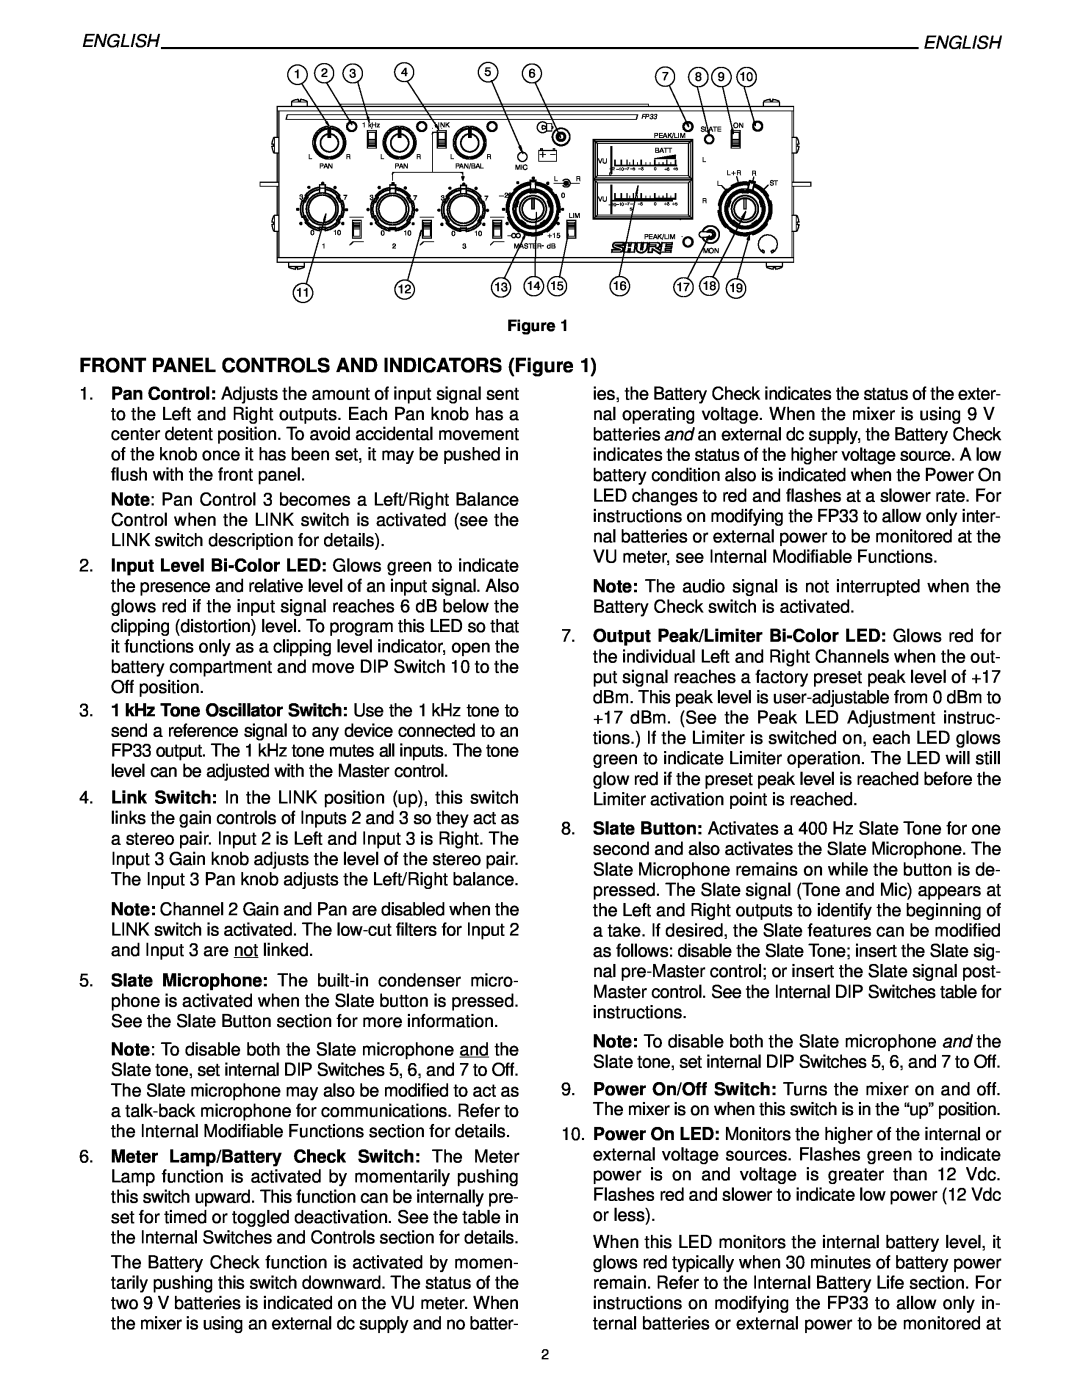 Shure FP33 manual FRONT PANEL CONTROLS AND INDICATORS Figure, English, 1 kHz 